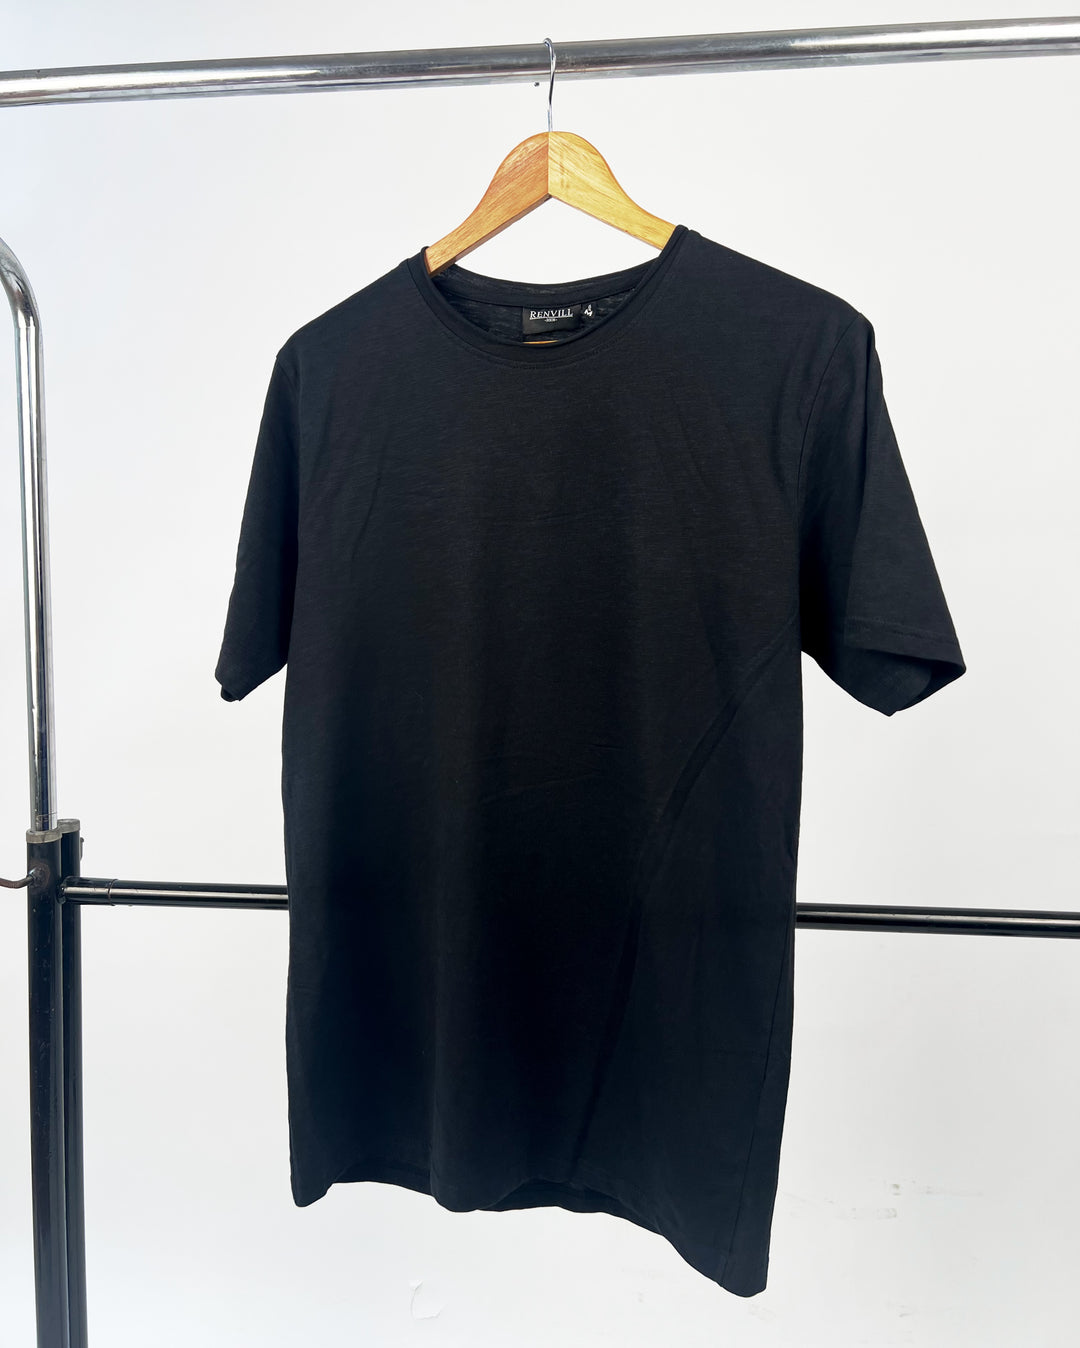 Renvill Solid T-shirt in black